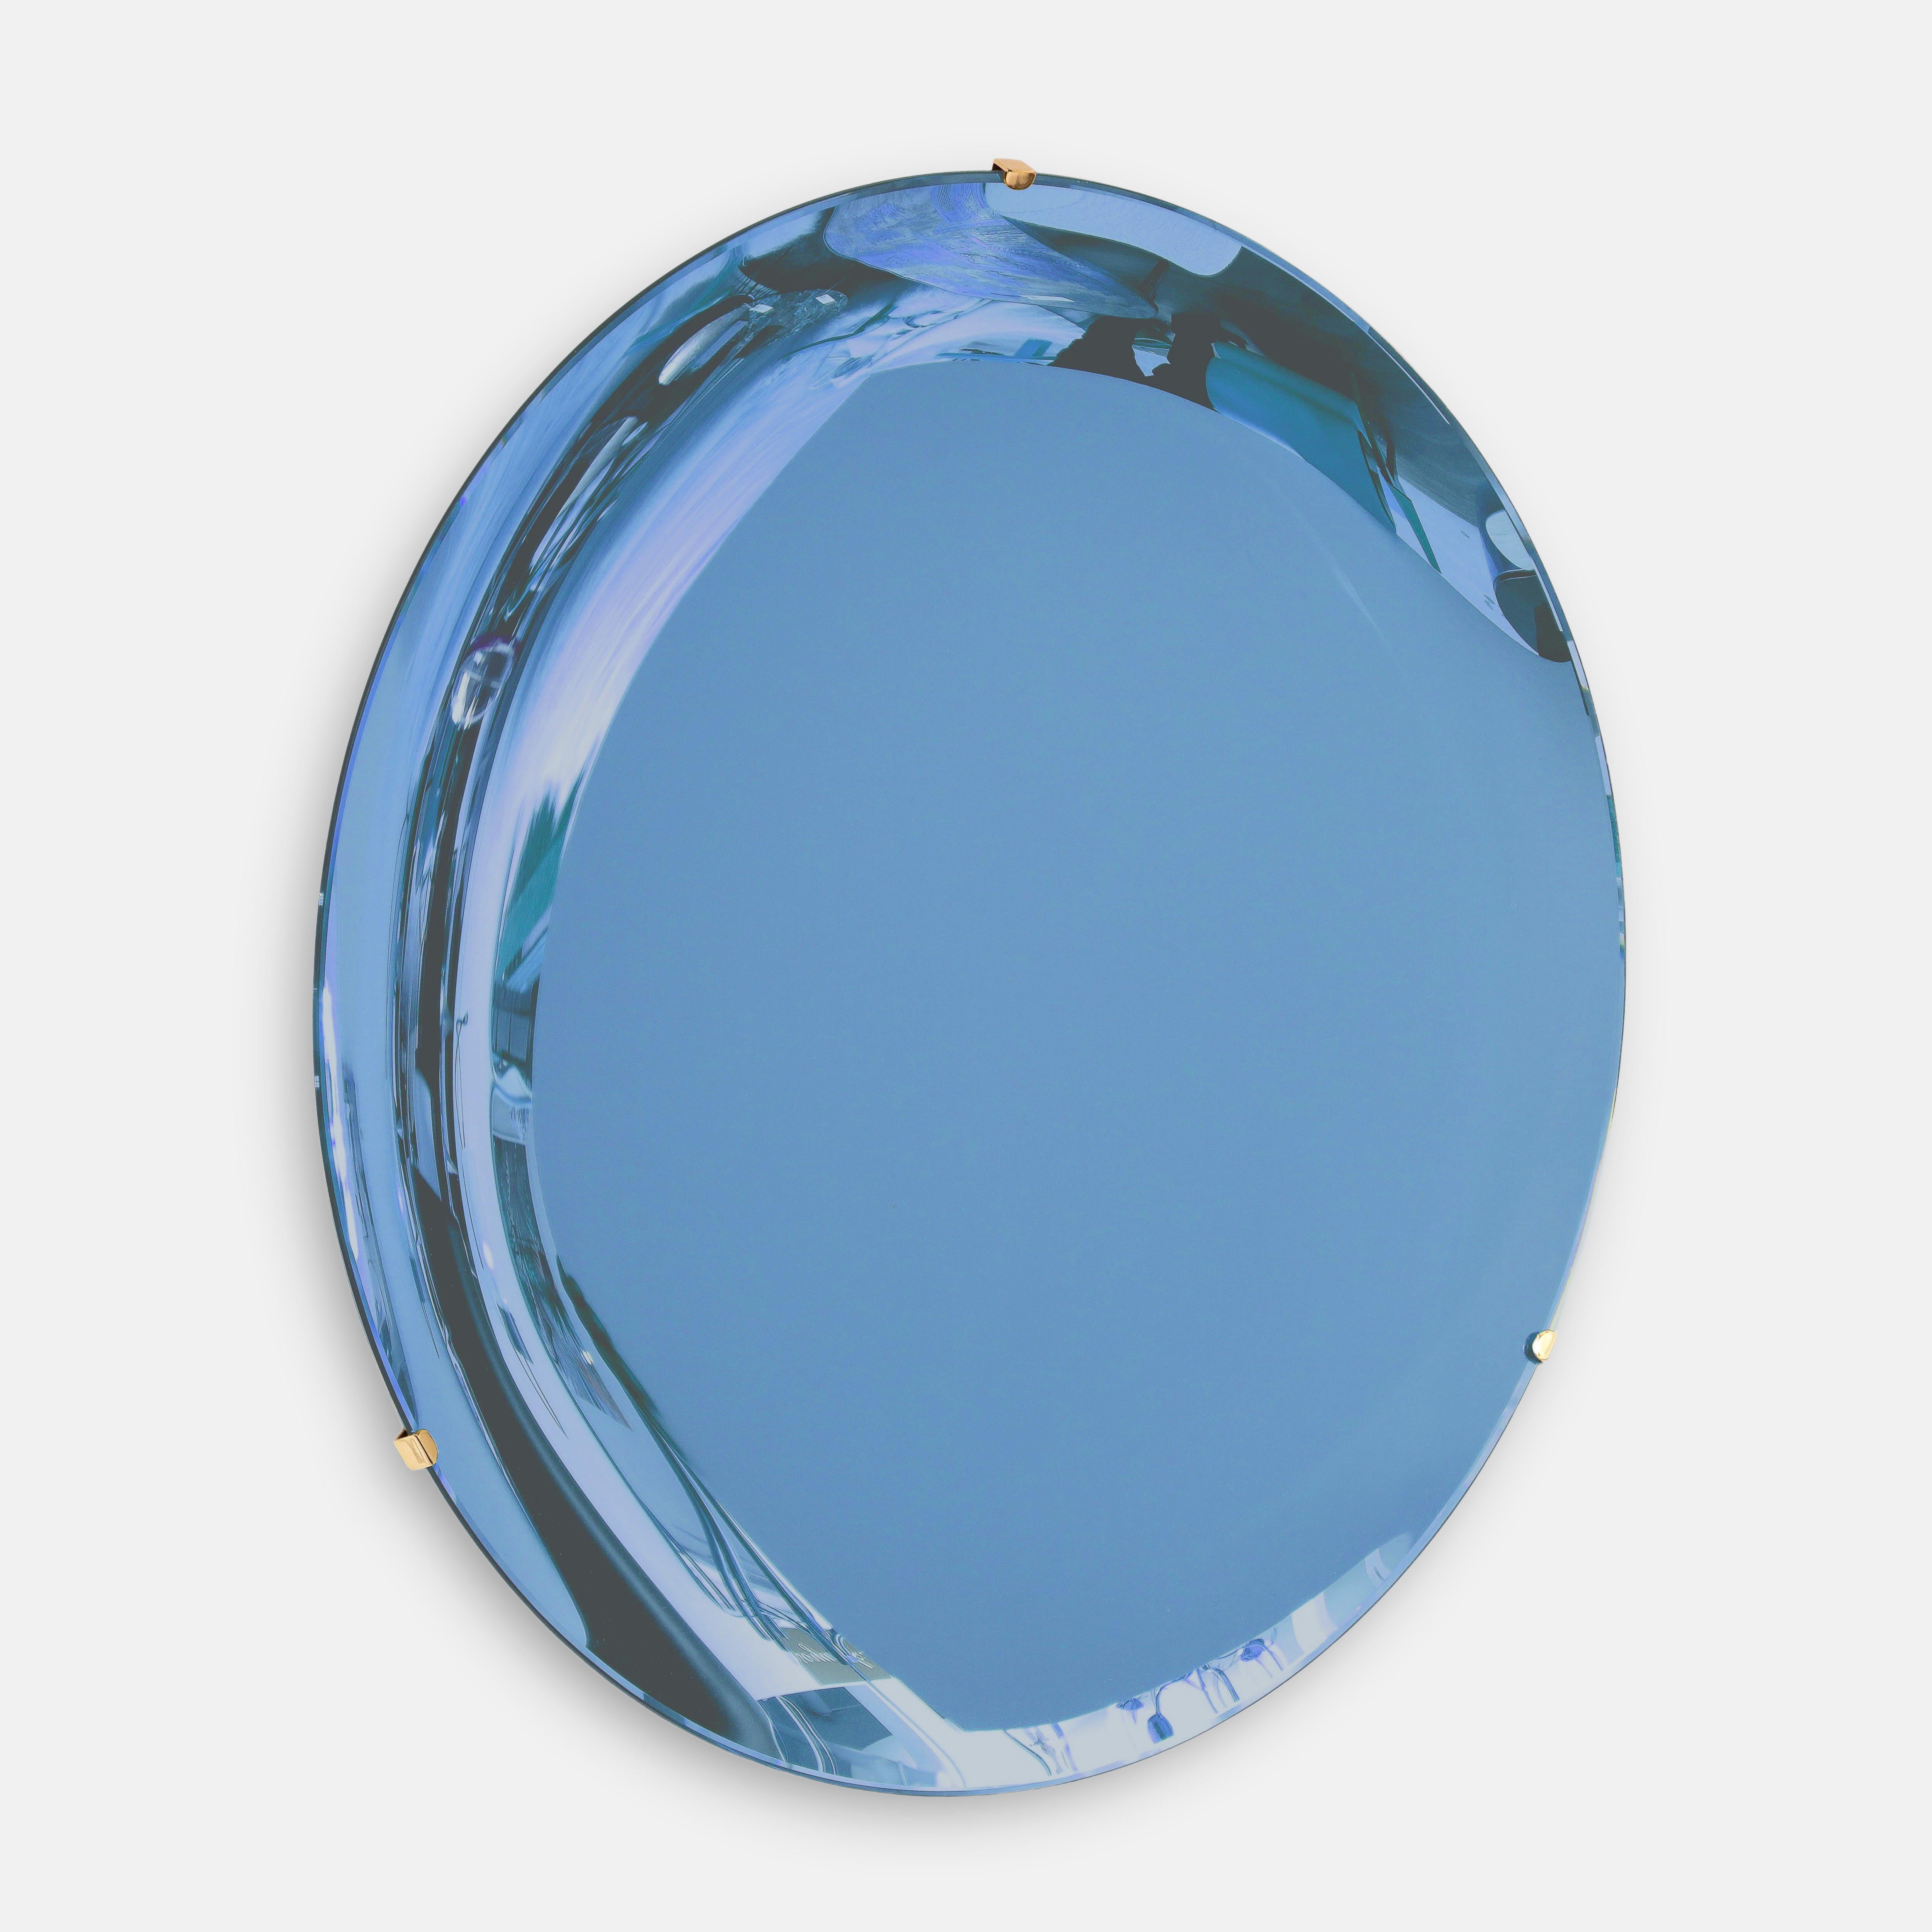 Italian Effetto Vetro Contemporary Custom Sculptural Round Concave Mirror in China Blue For Sale